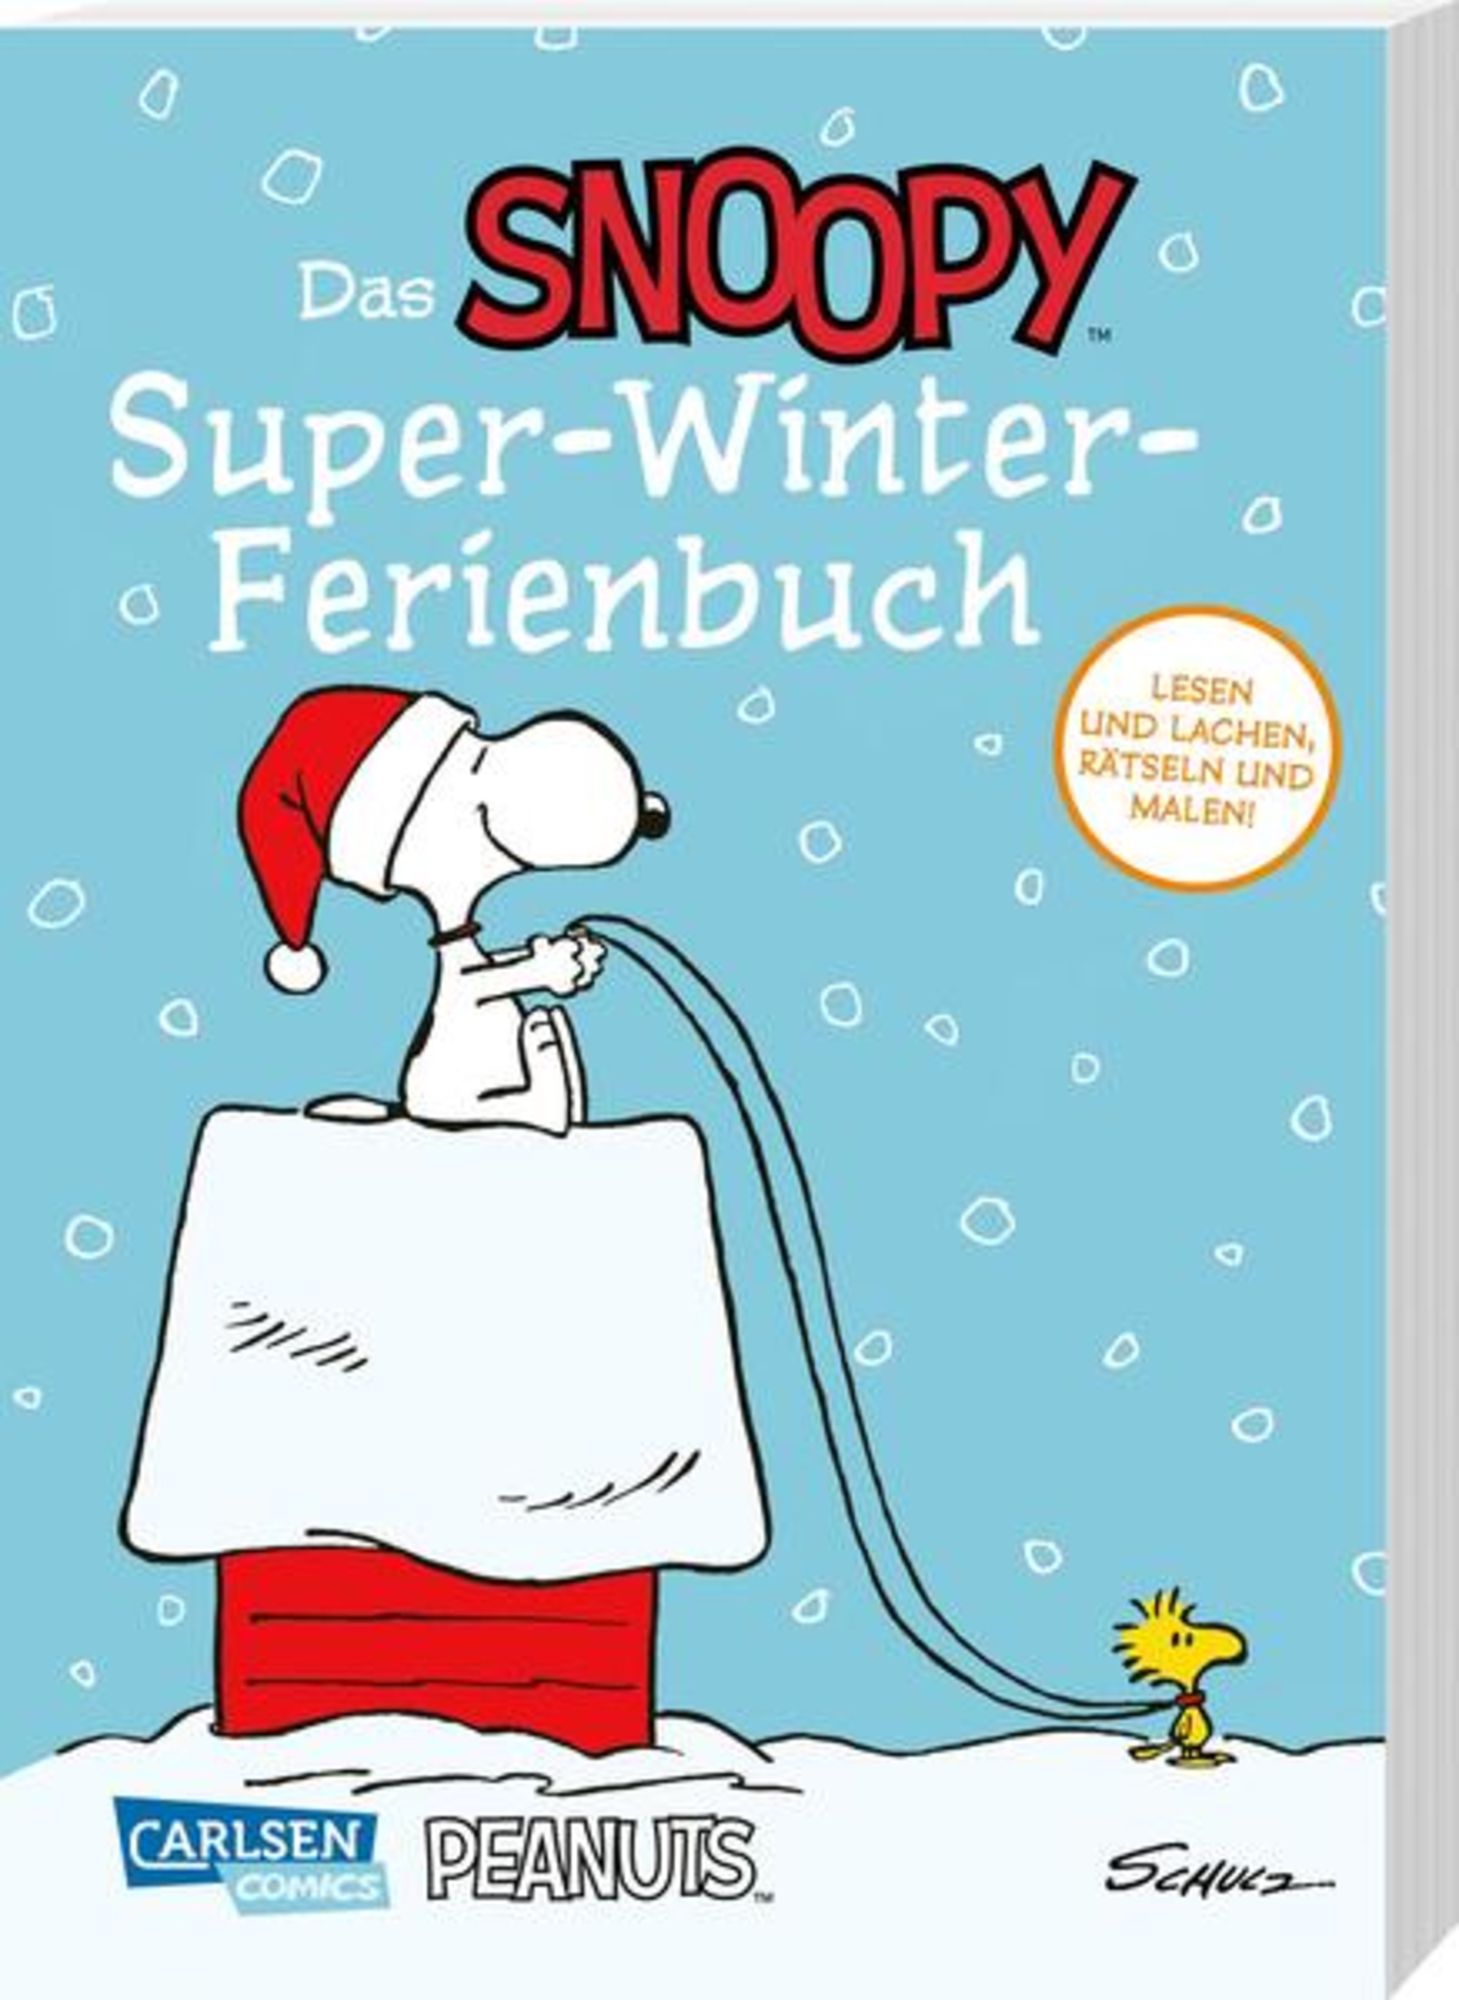 https://images.thalia.media/-/BF2000-2000/3e562a05fdaa4bbd90e0a5f14ea0452d/das-snoopy-super-winter-ferienbuch-taschenbuch-charles-m-schulz.jpeg